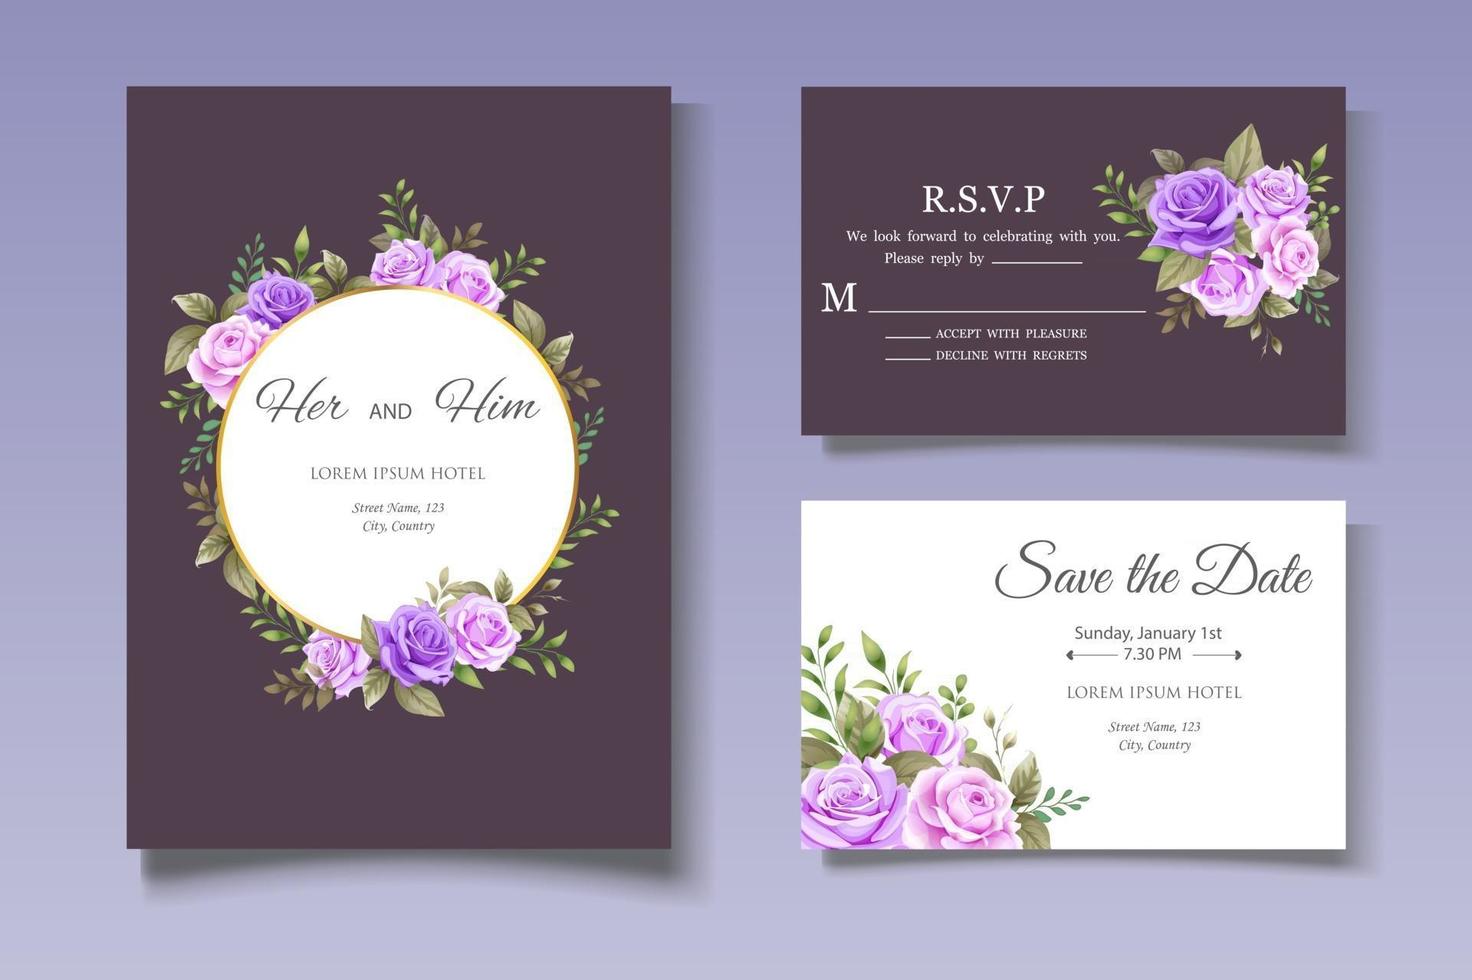 Elegant floral wedding invitation card template vector